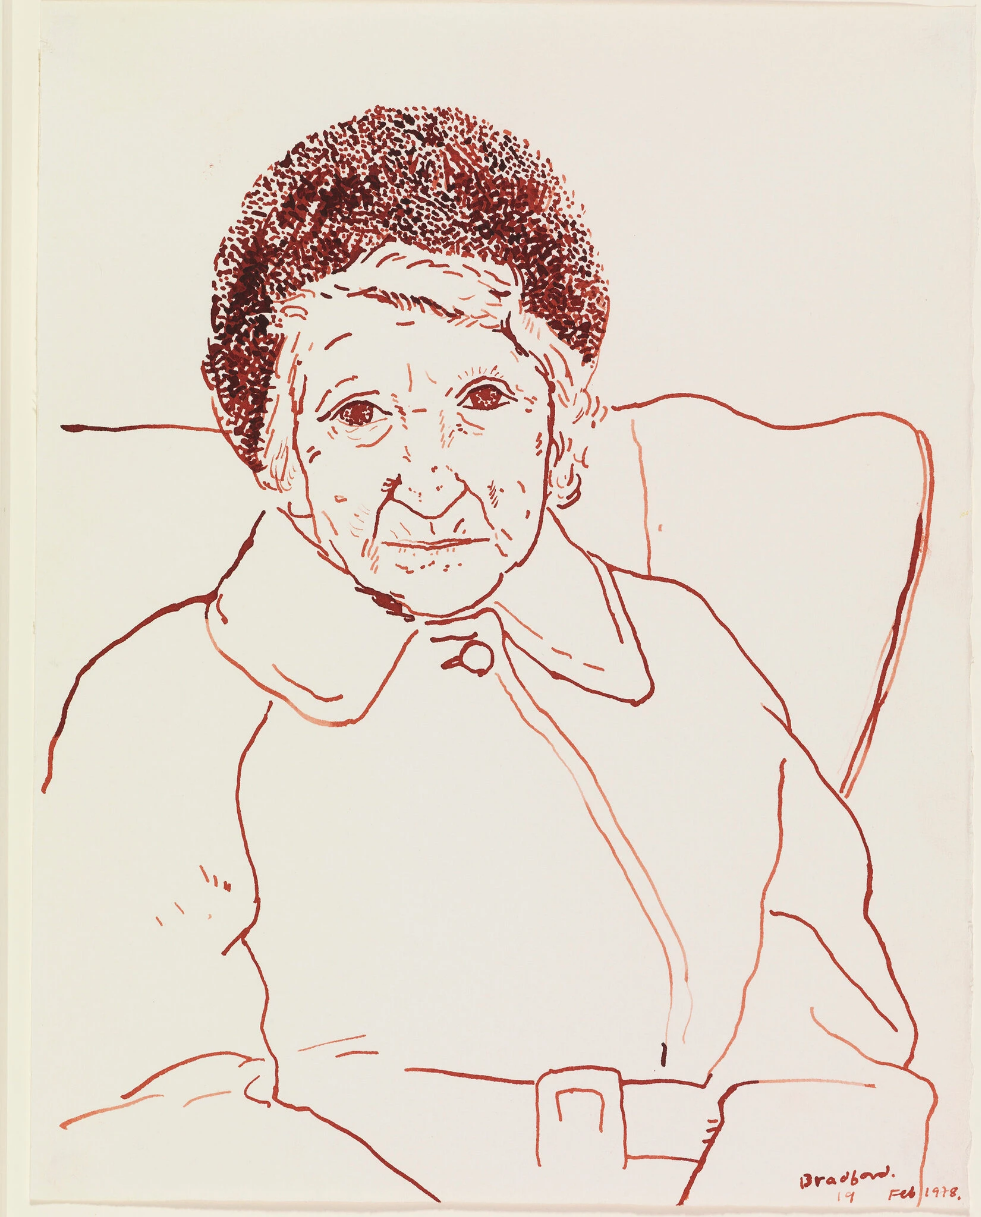 “Mother, Bradford. 19 Feb 1978,” sepia ink on paper. Credit The David Hockney Foundation